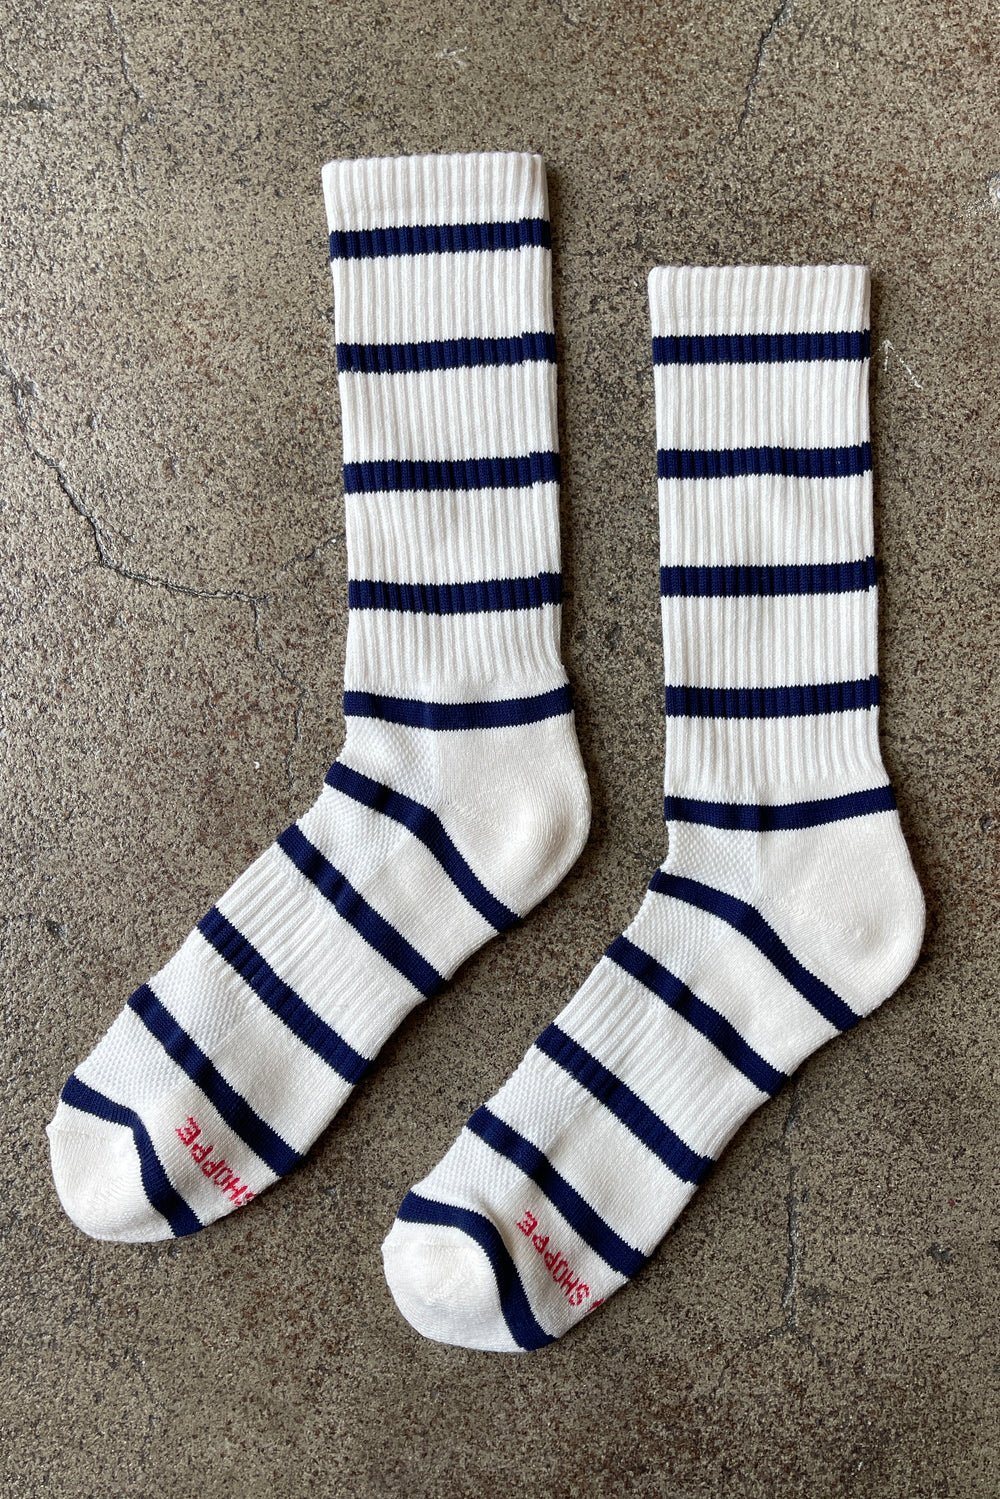 Le Bon Shoppe Extended Boyfriend Sailor Stripe Socks - The Mercantile London